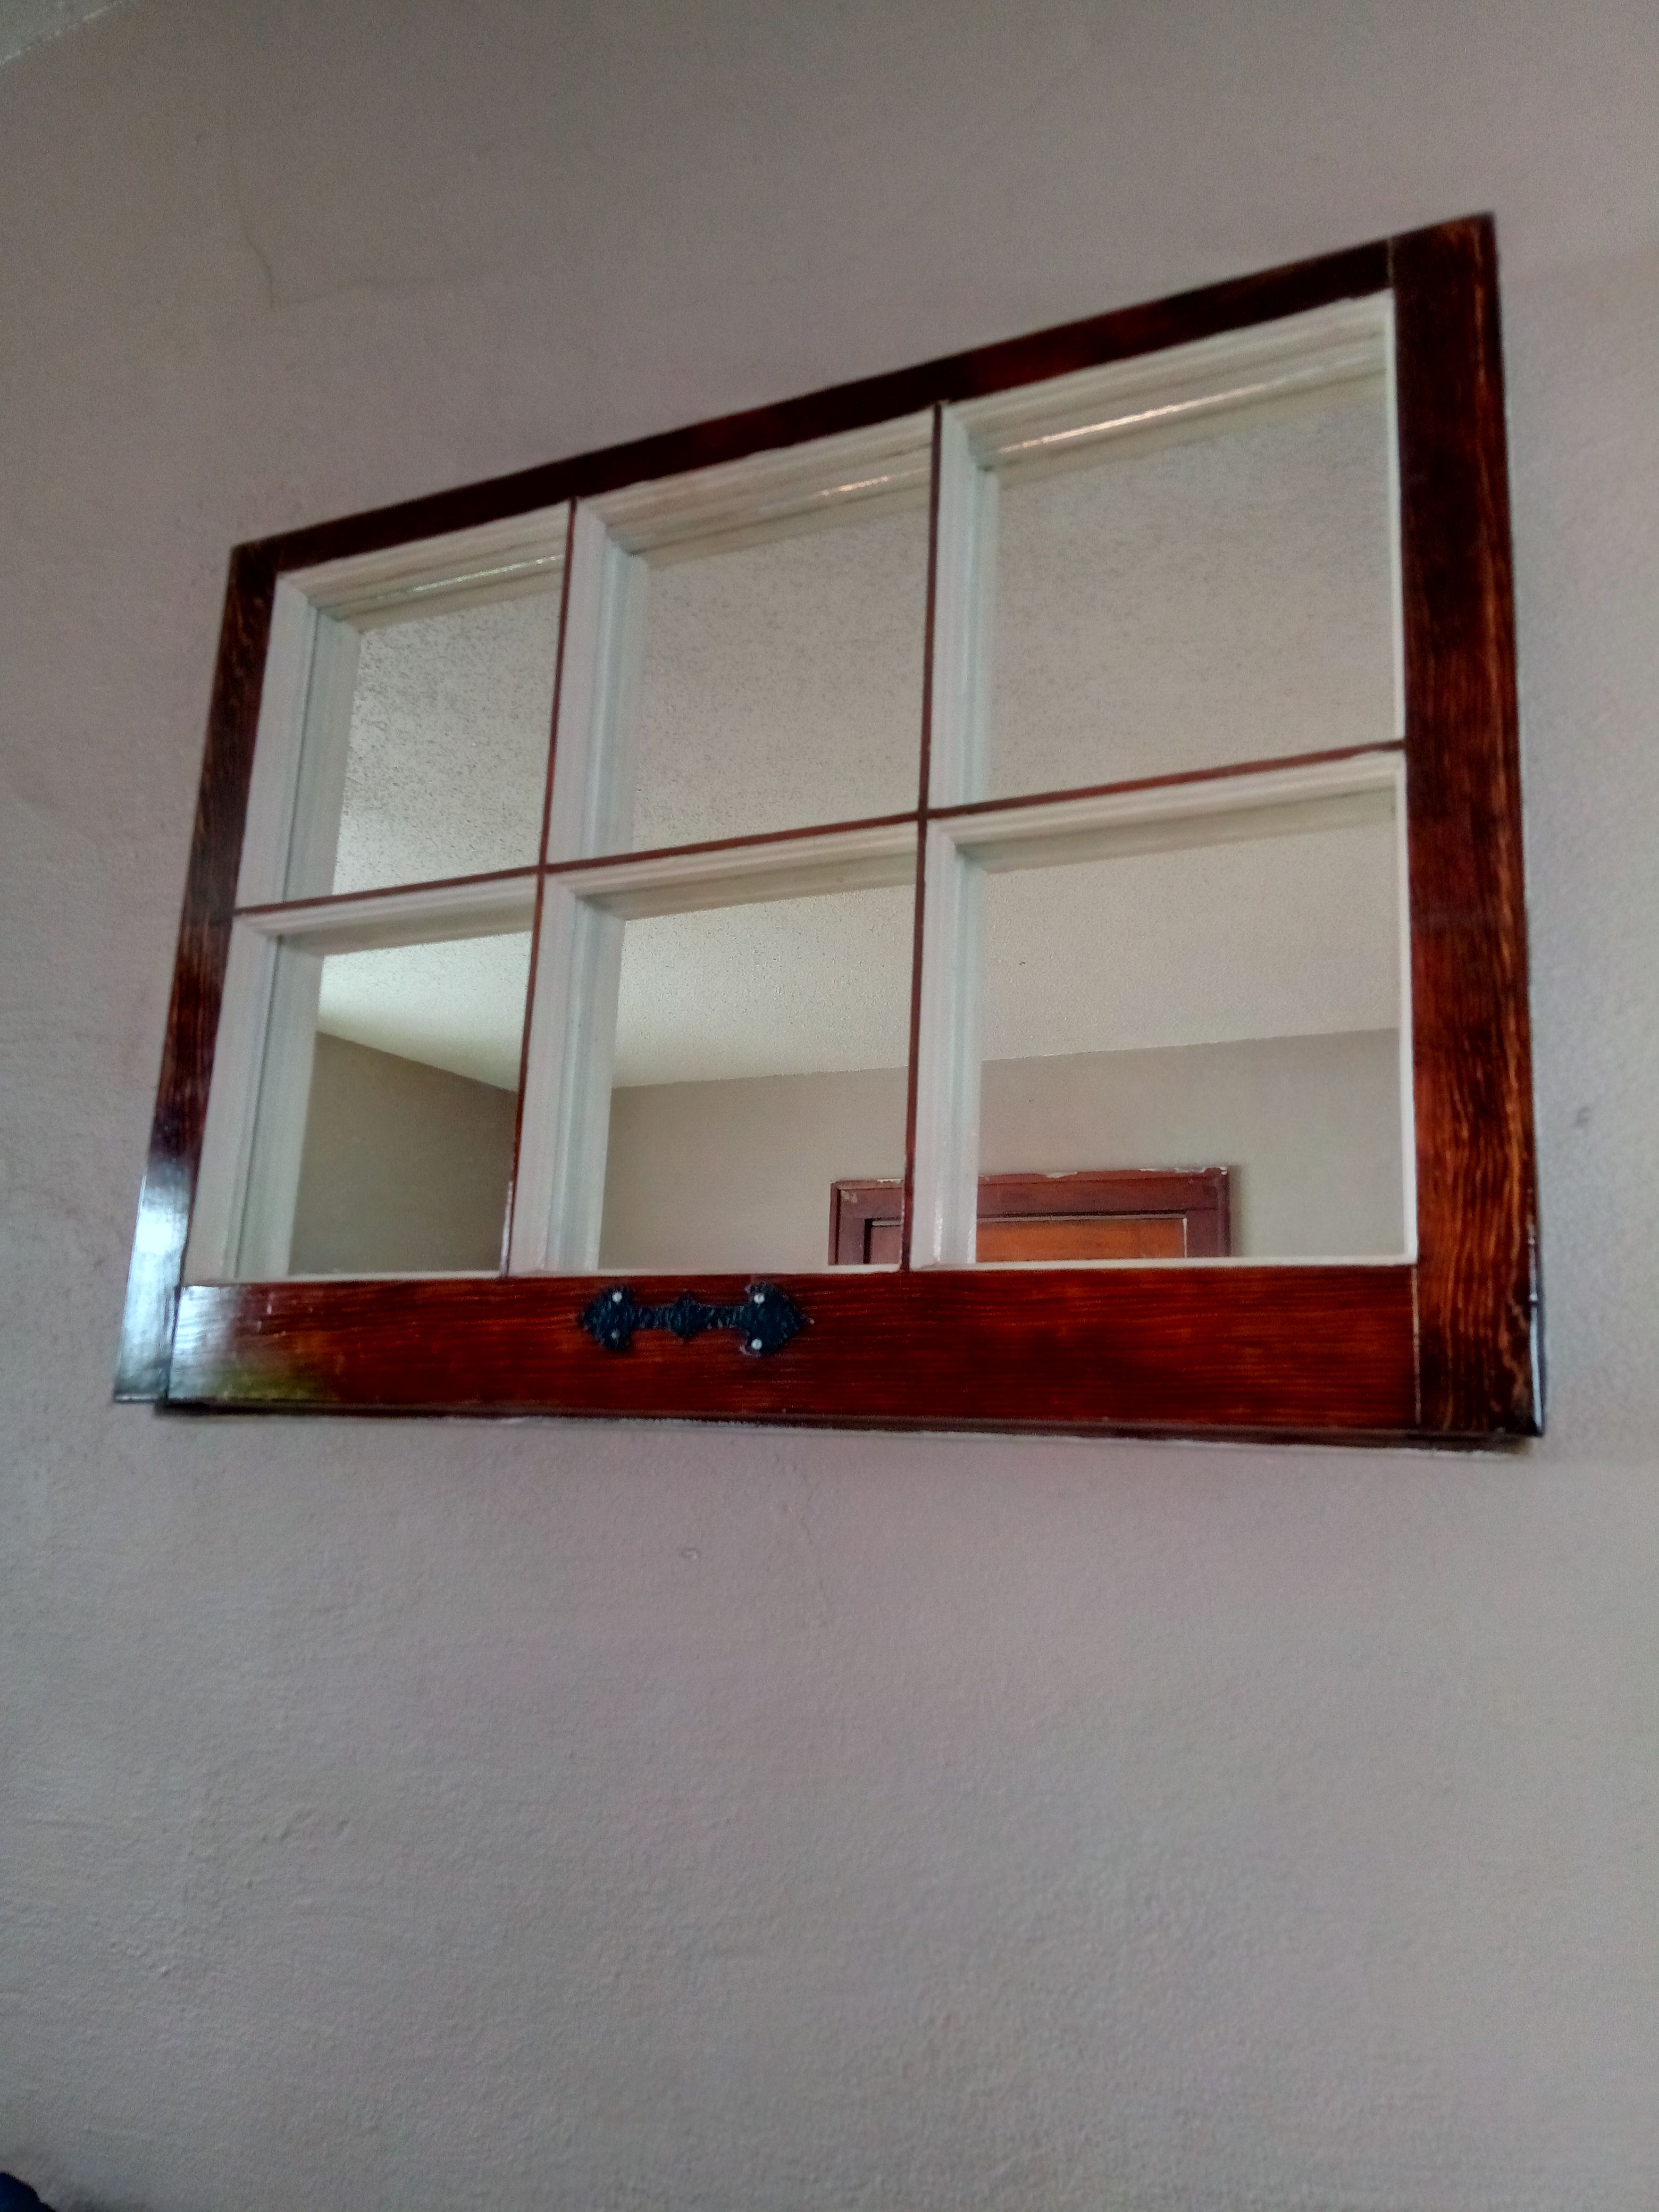 Antique mirrored window frame